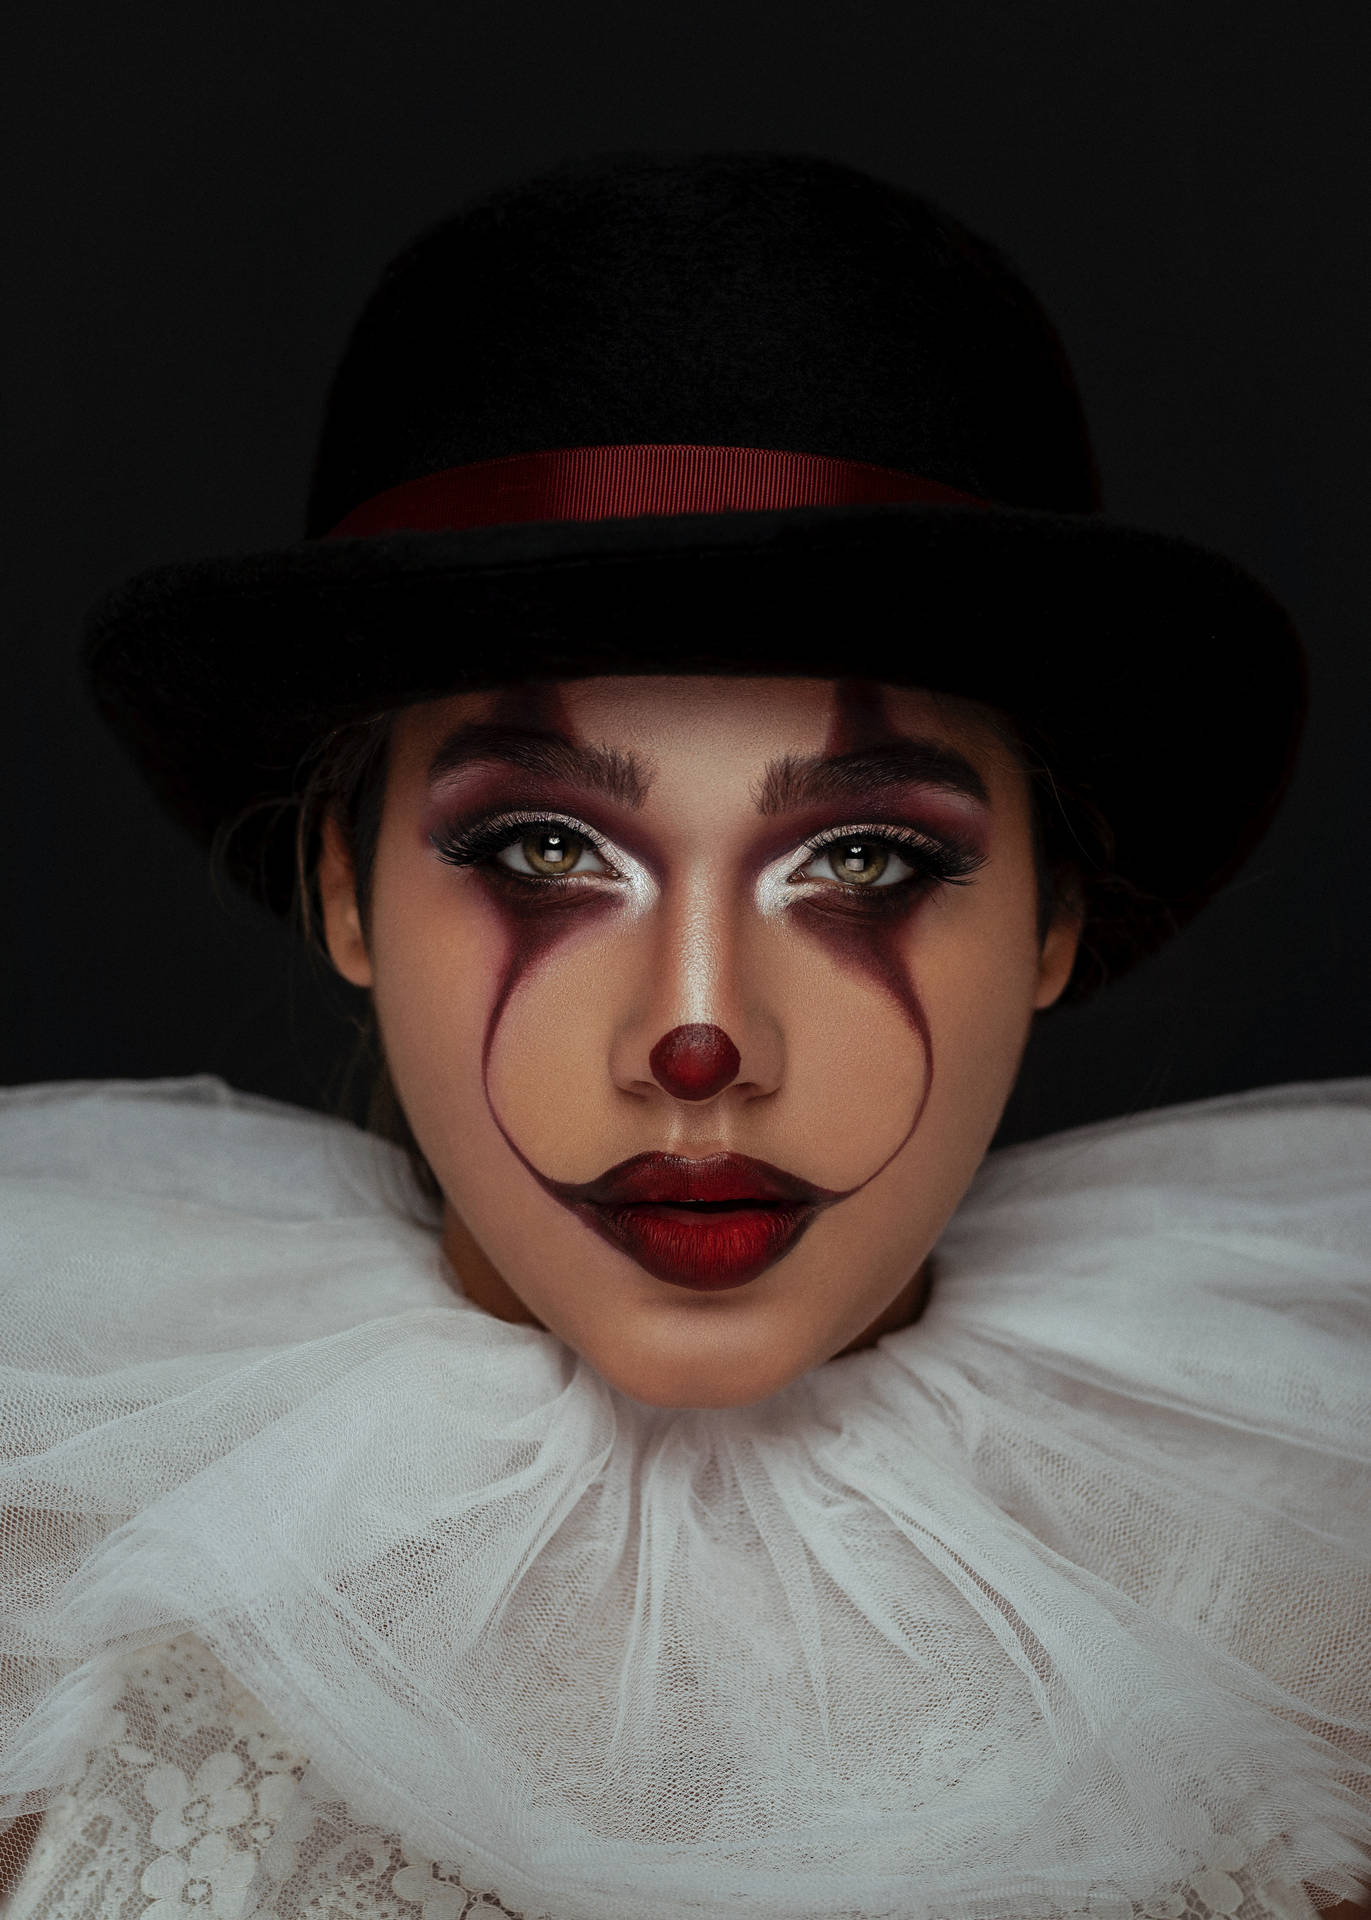 A Creative Take on a Classic Clown Look Wallpaper